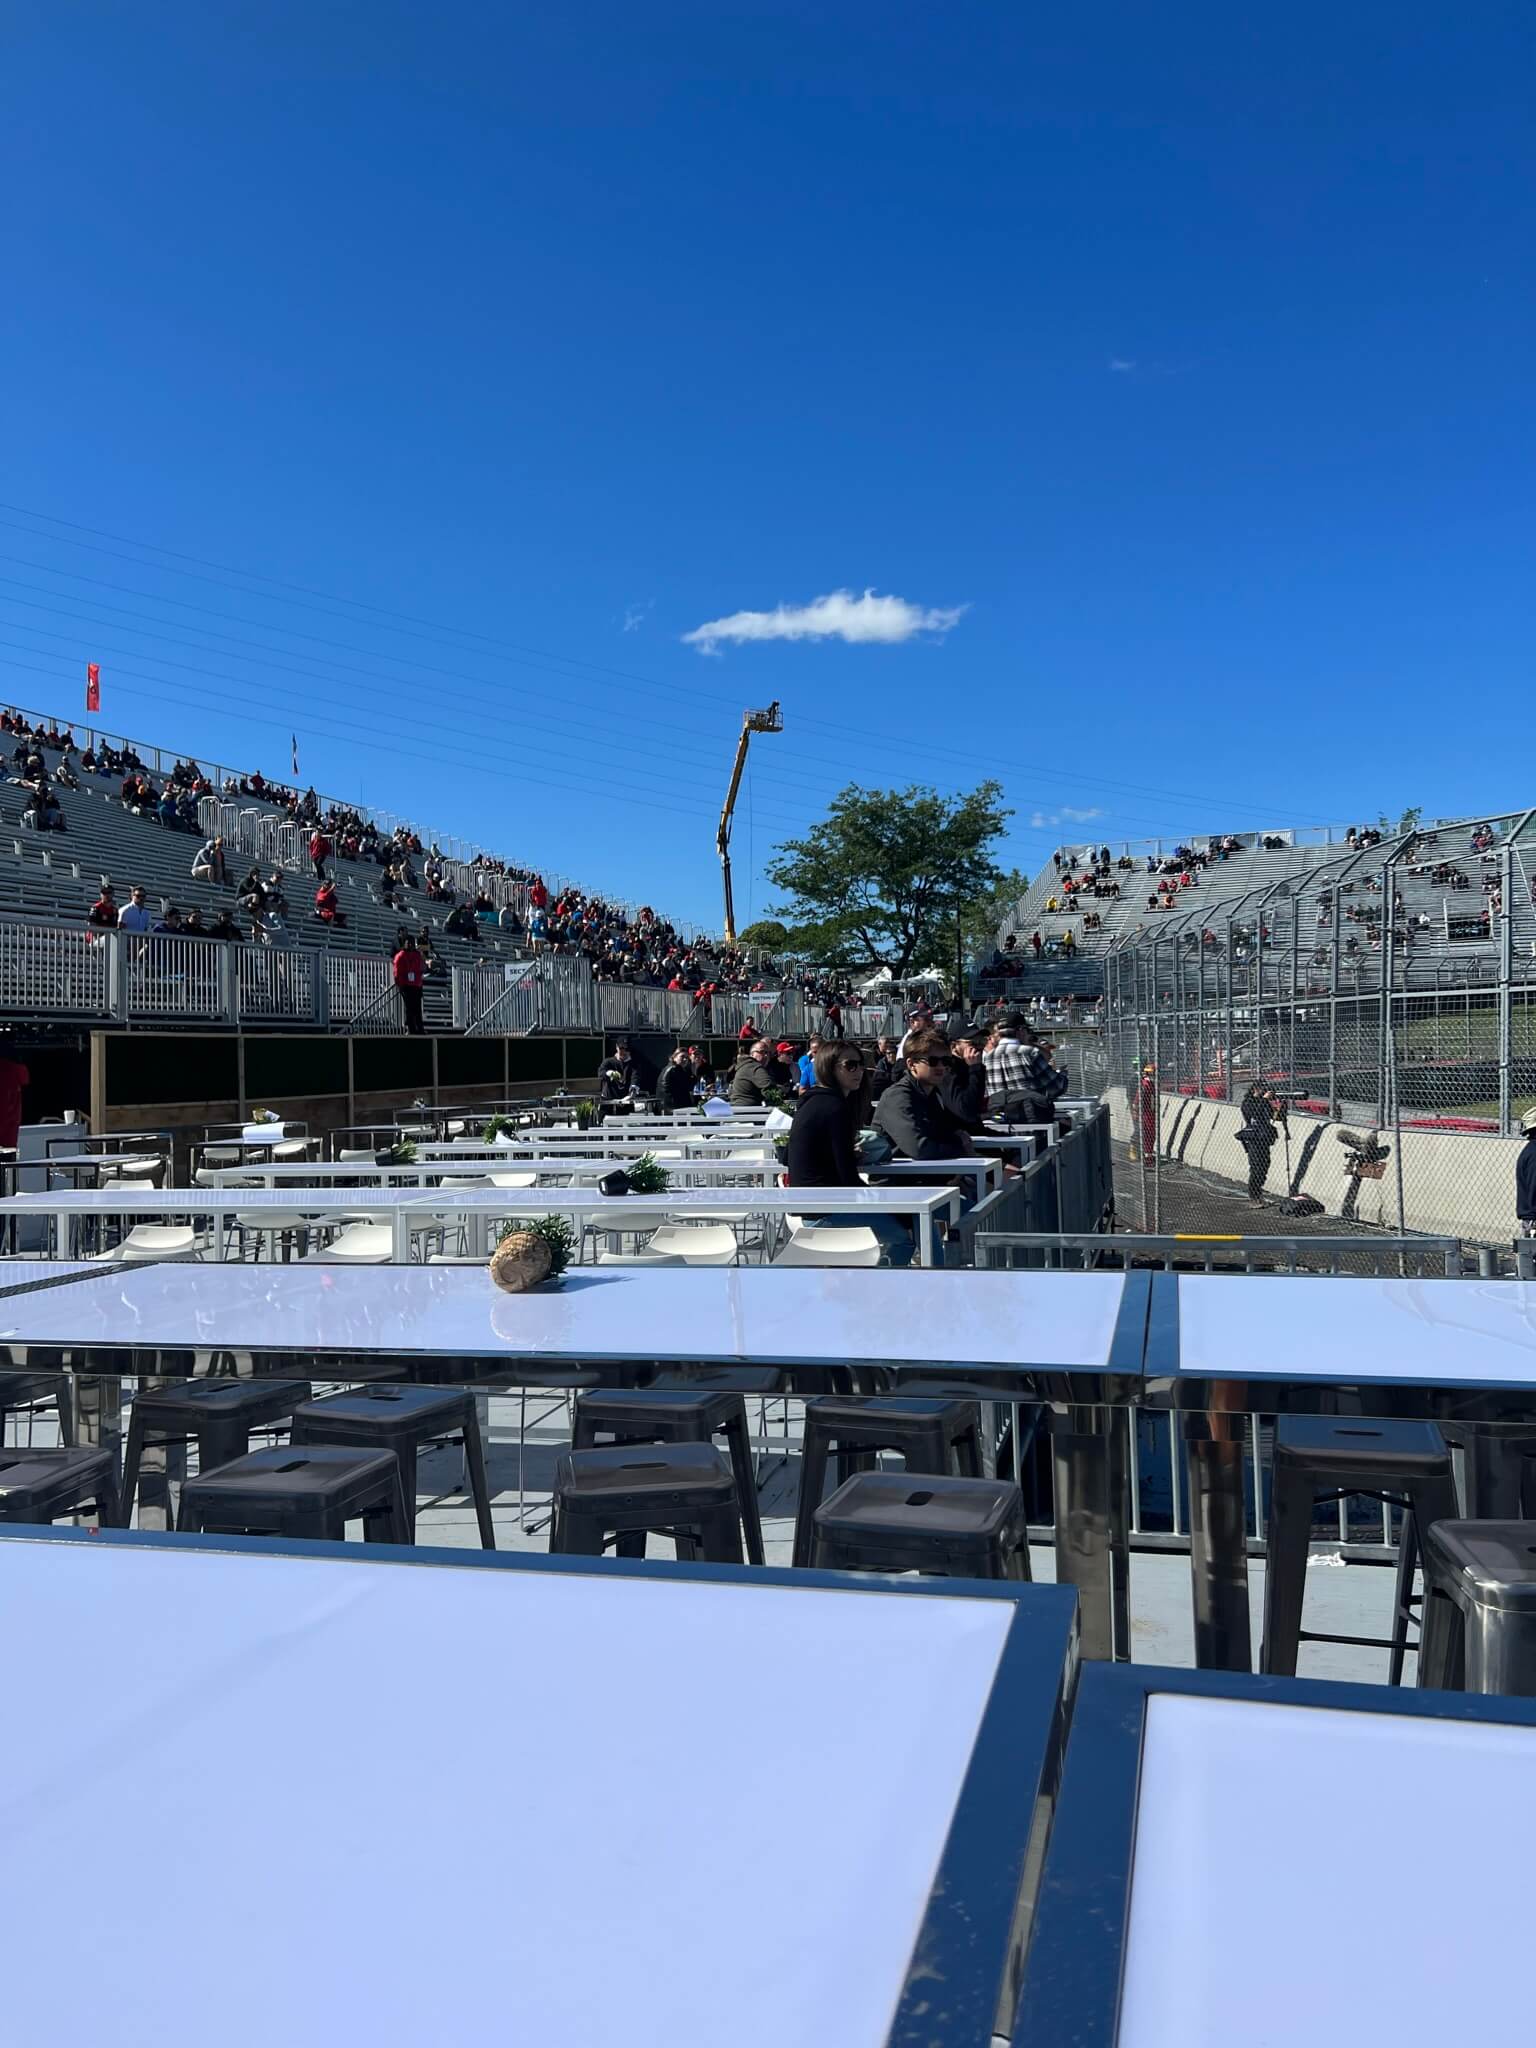 f1 Canada Grand Prix; f1 Montreal Race experience